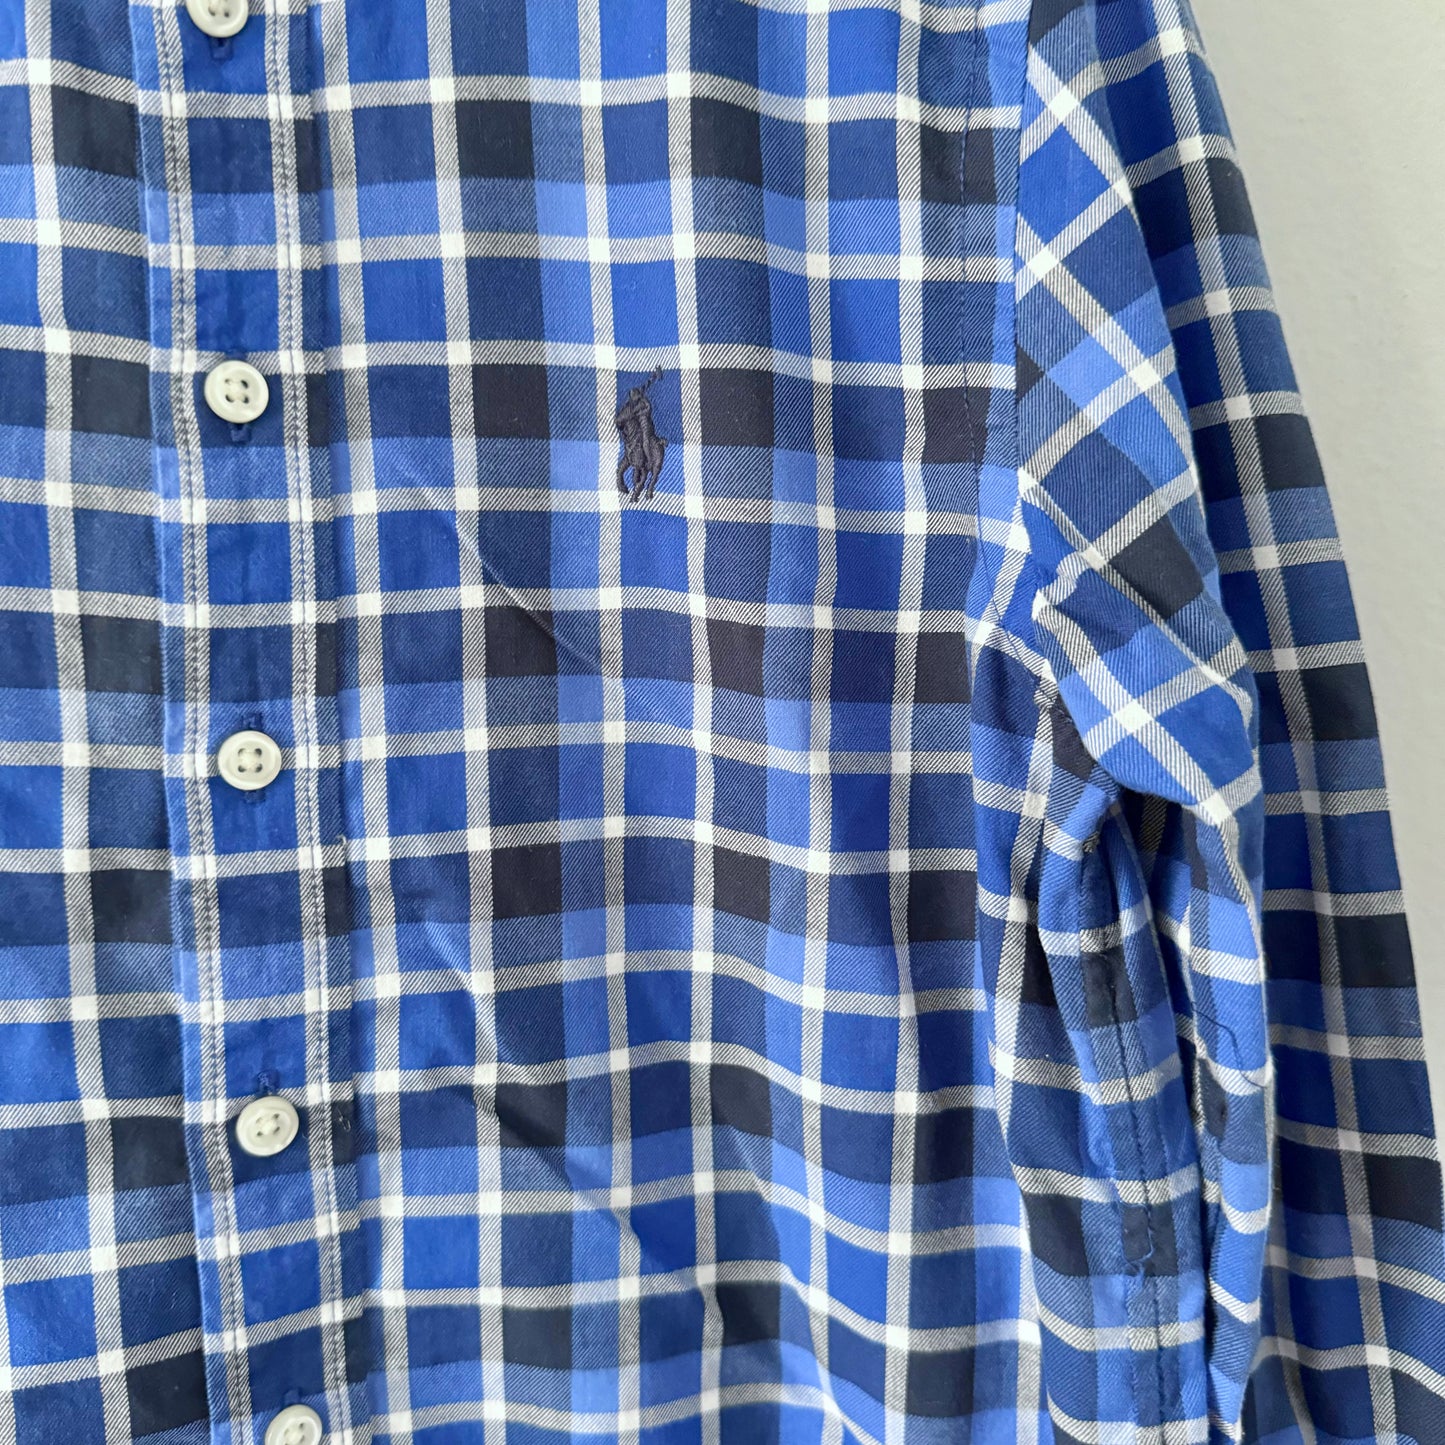 Polo Ralph Lauren / Plaid long sleeve shirt / 8Y